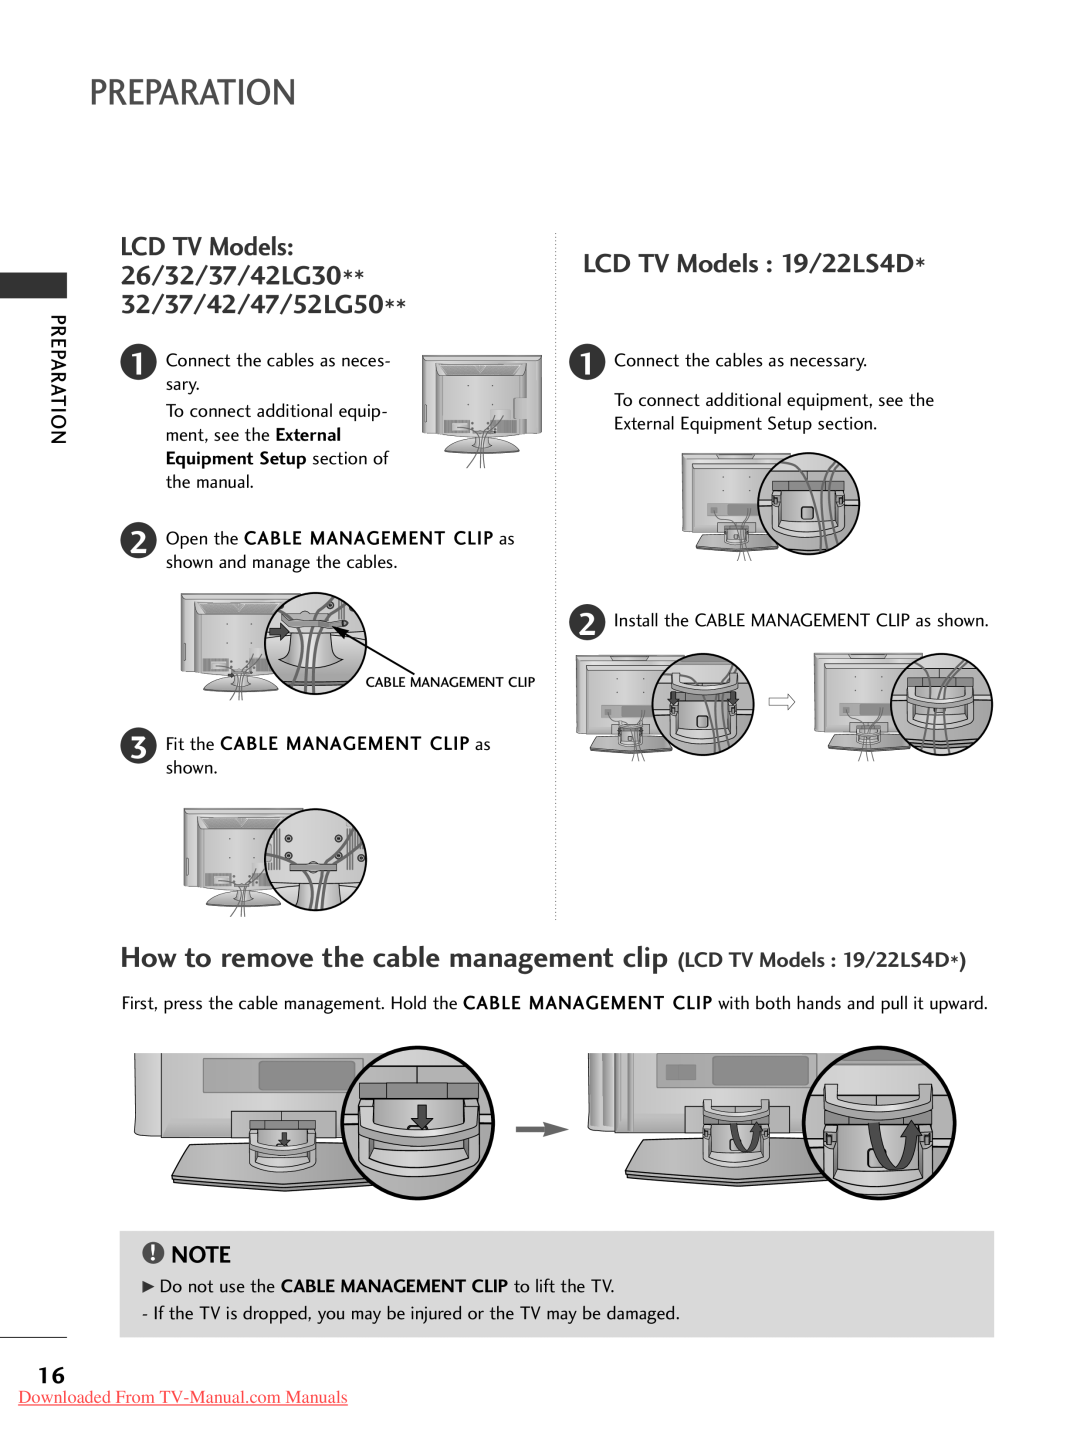 LG Electronics 19 9L LS S4 4D, 42 2P PG G3 30 How to remove the cable management clip LCD TV Models 19/22LS4D, Preparation 